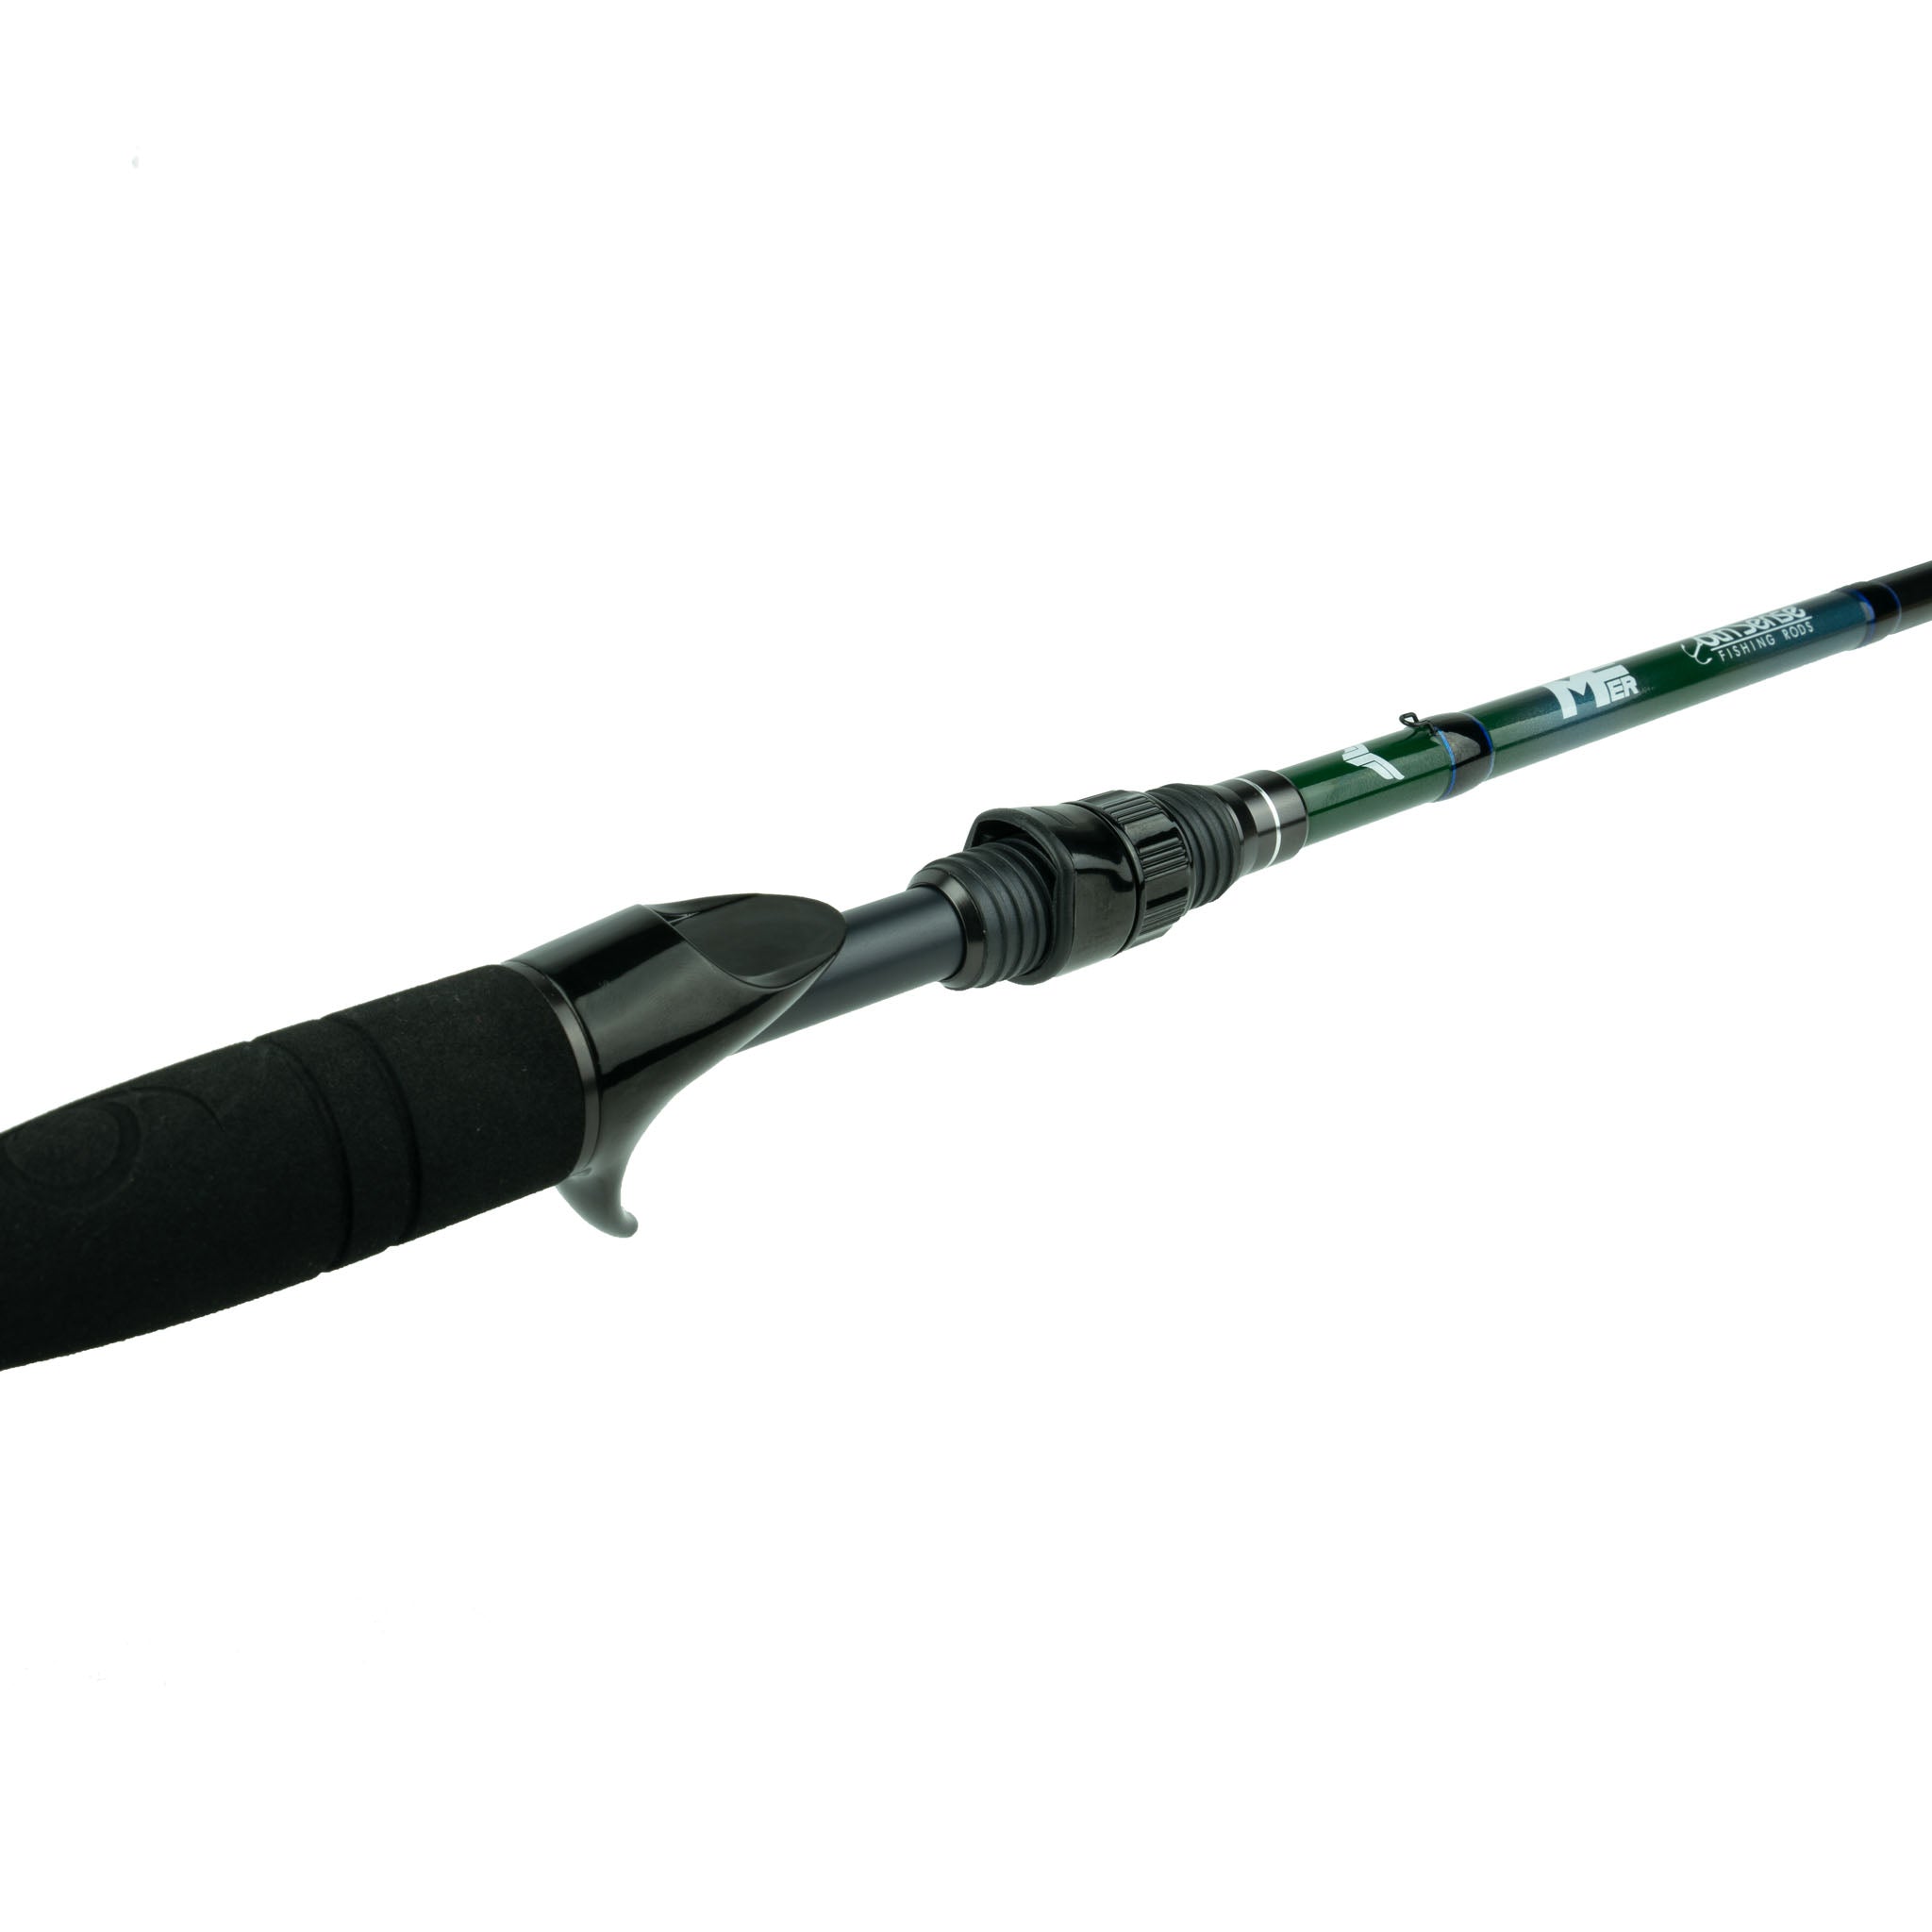 6th Sense Fishing - Rods - Response 7'2 Extra-Heavy, Fast